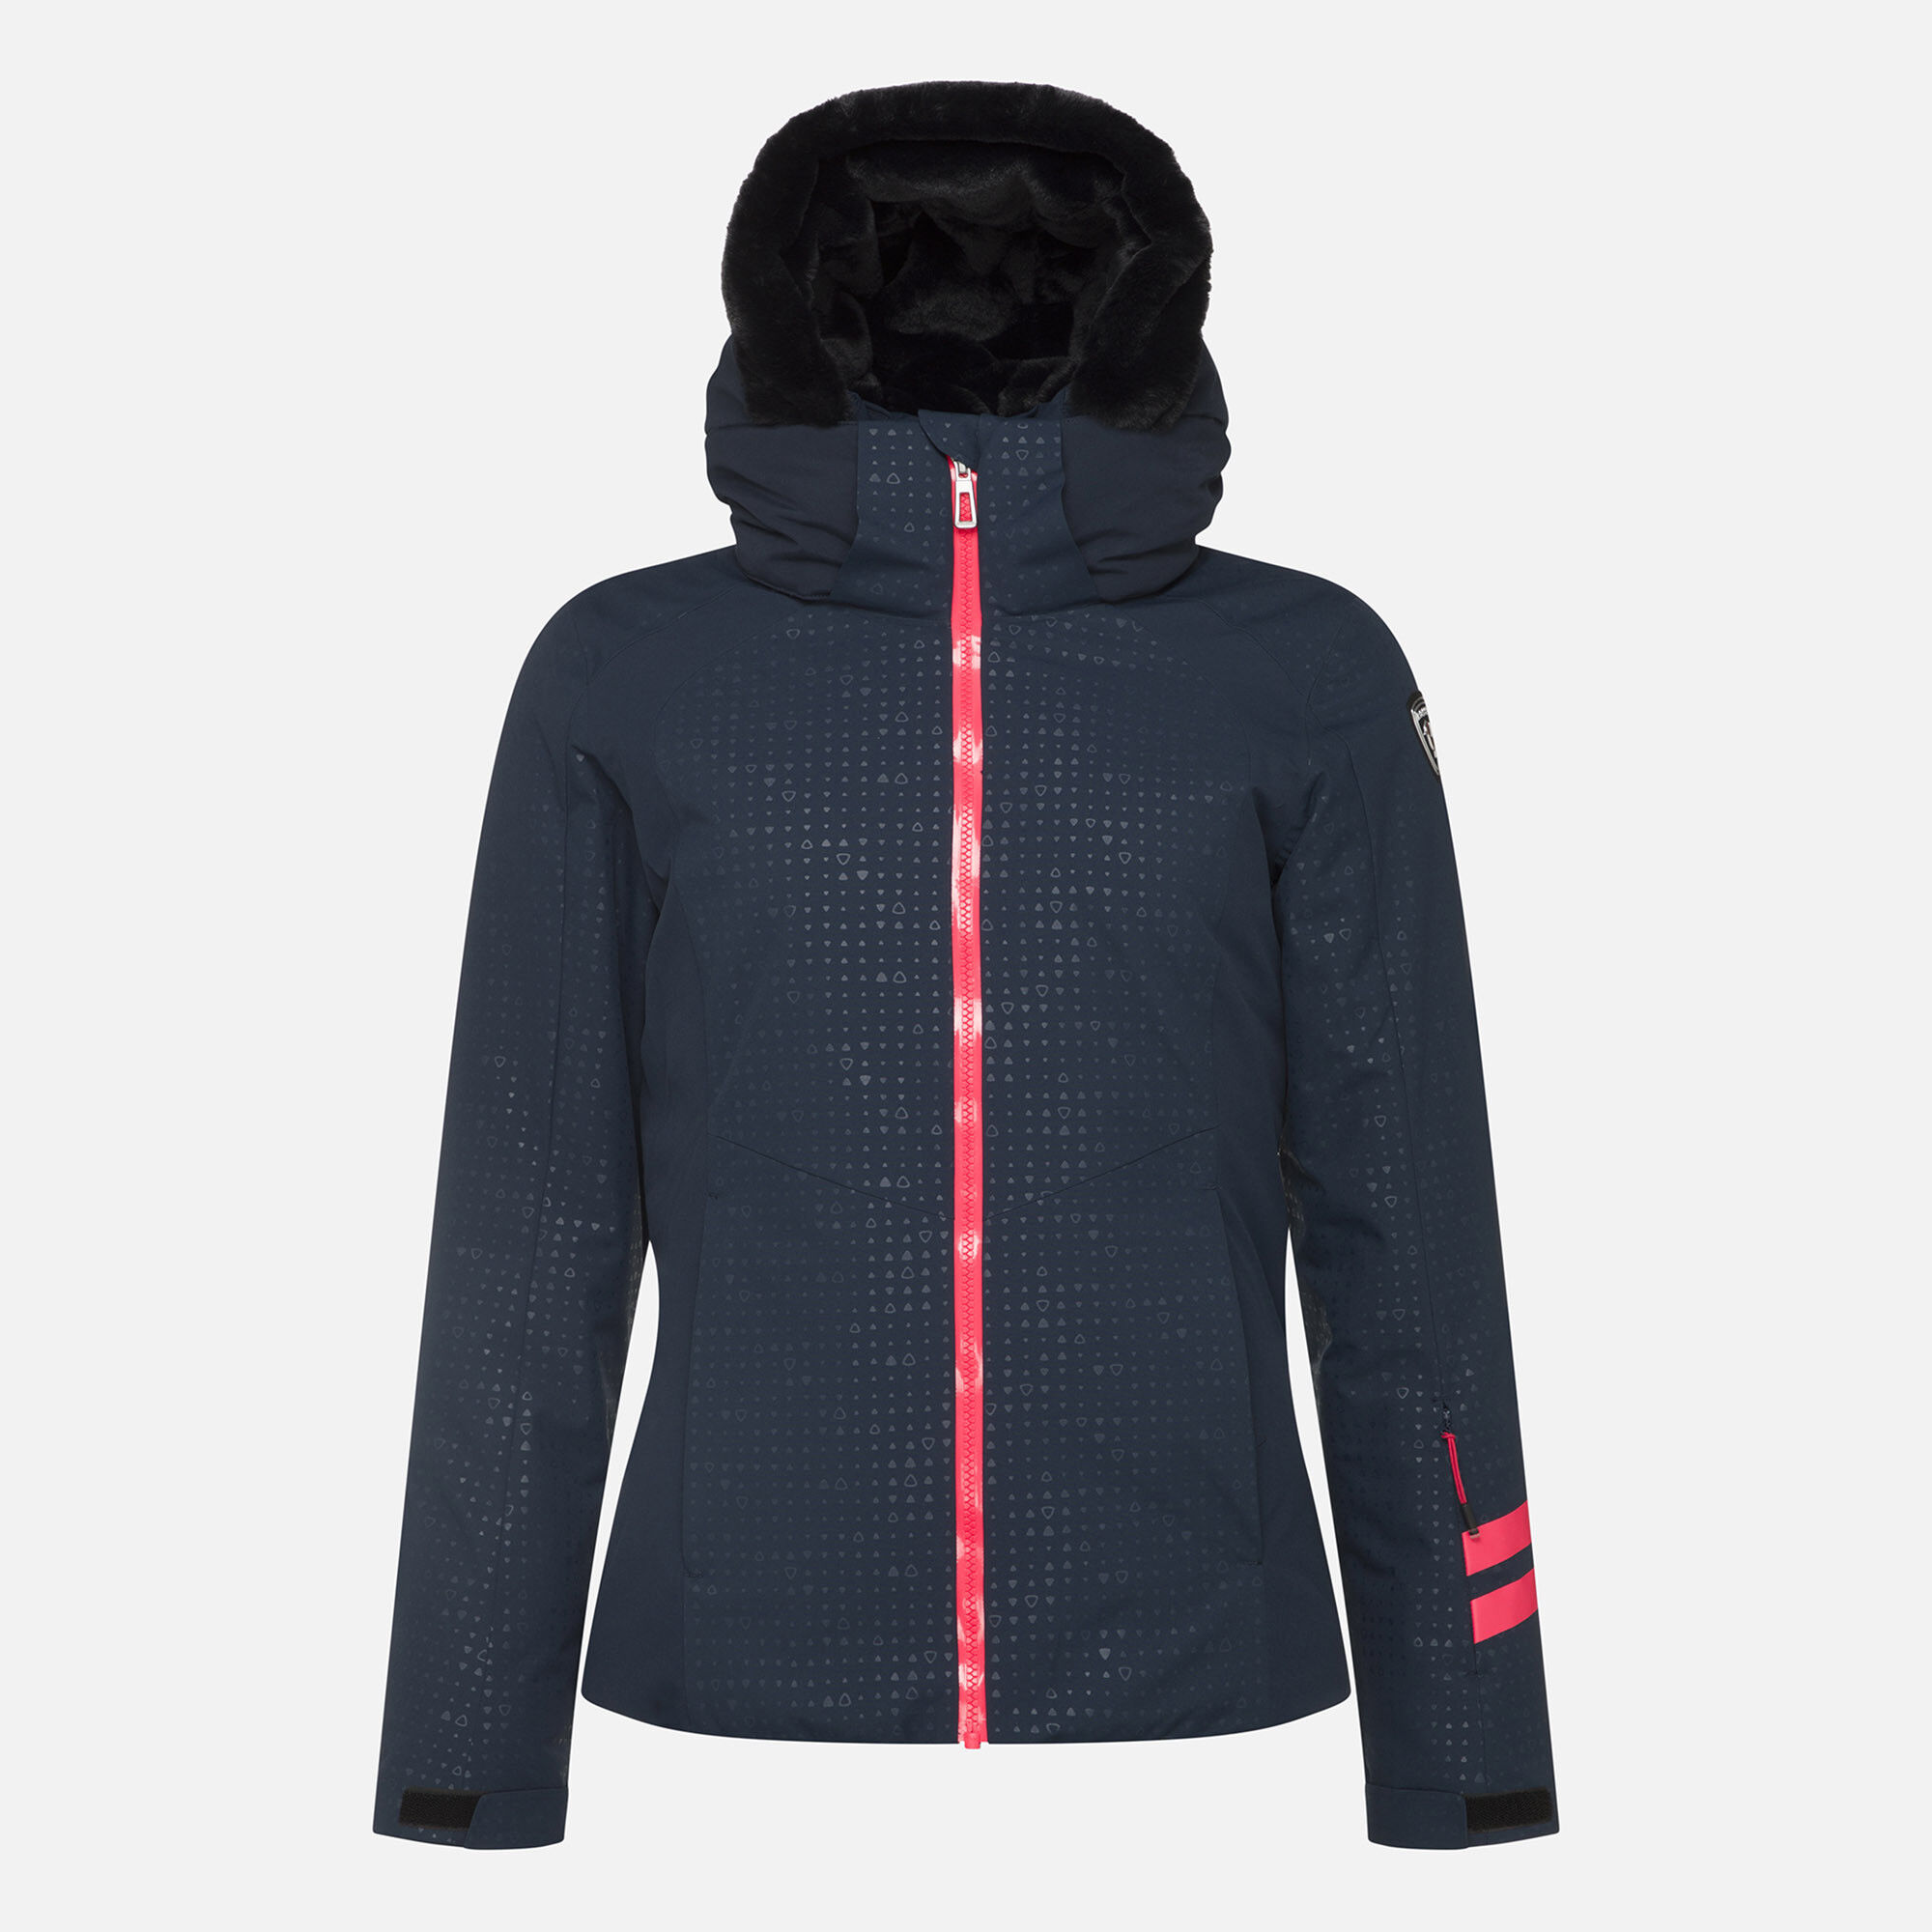 Rossignol Controle Jkt - Ski jacket - Women's